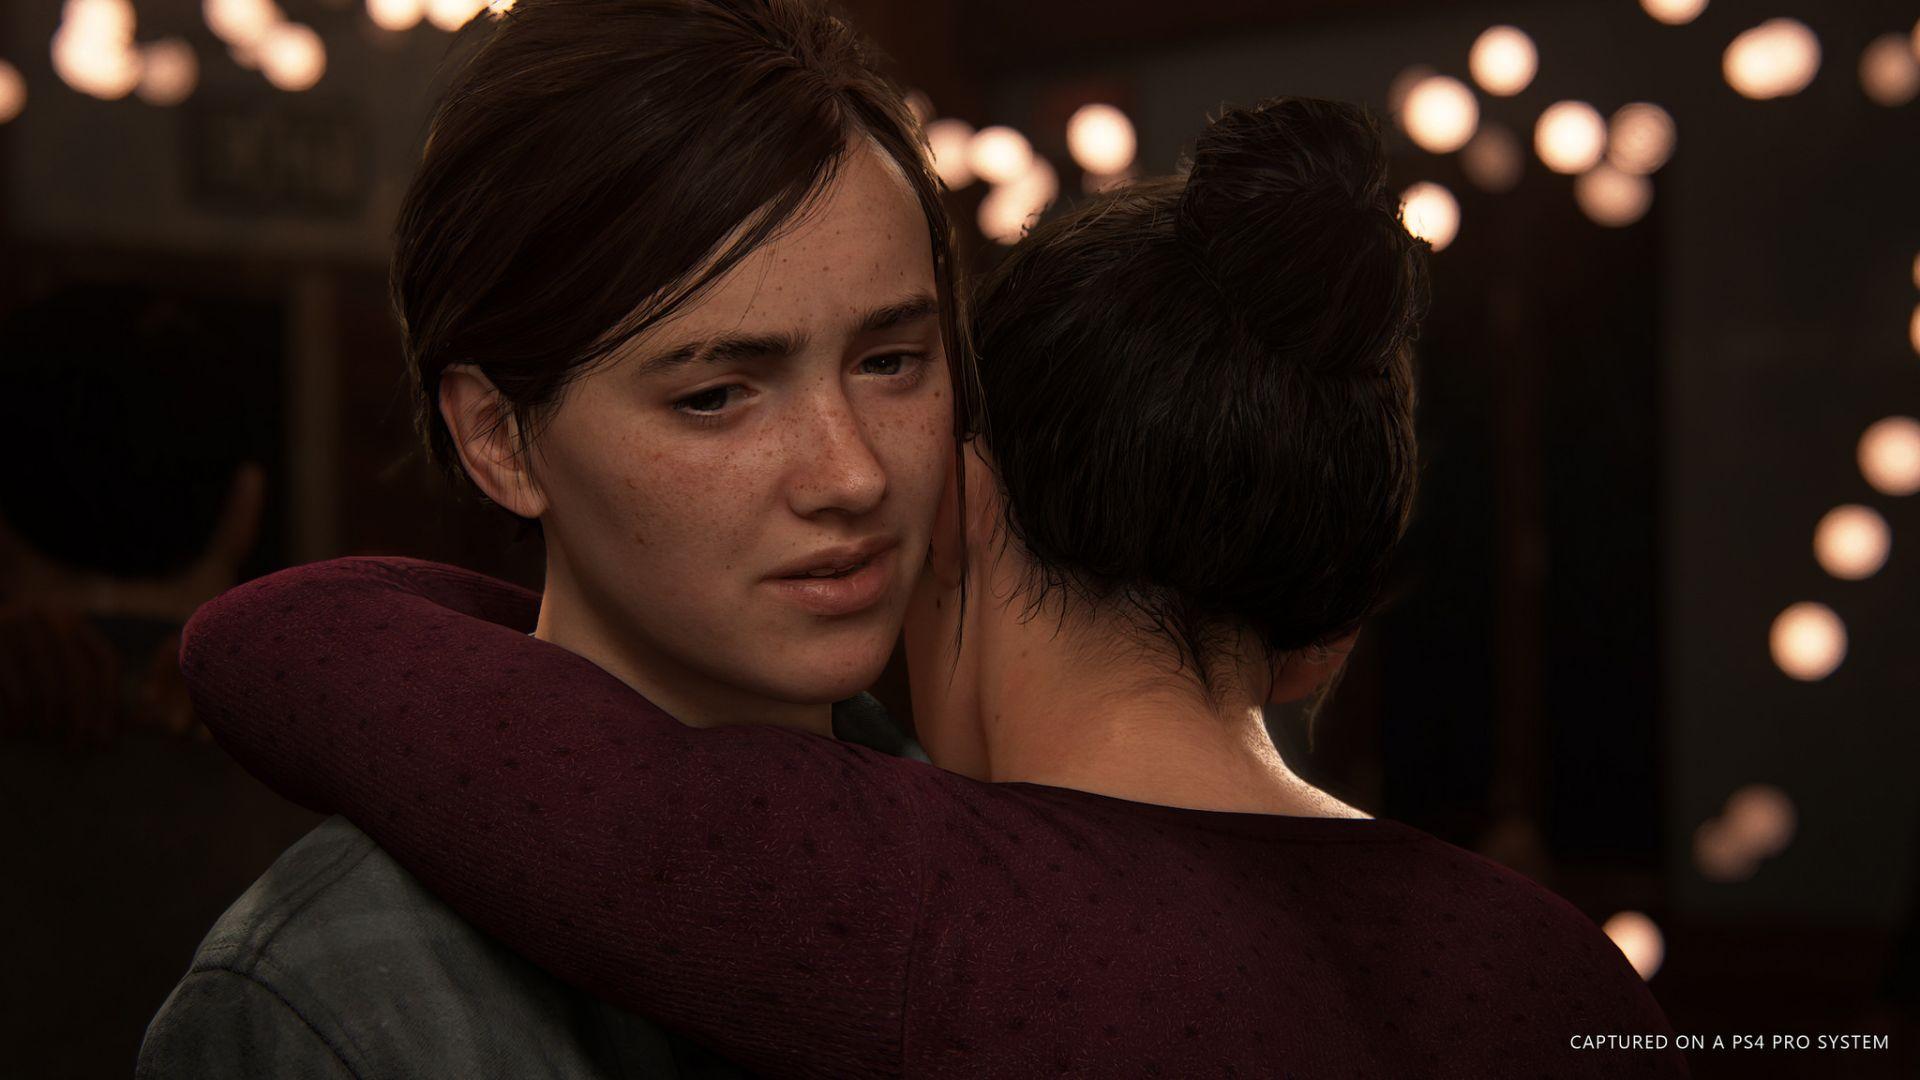 The Last of Us Part 2 Plot Details Revealed, Ellie's Mother Anna